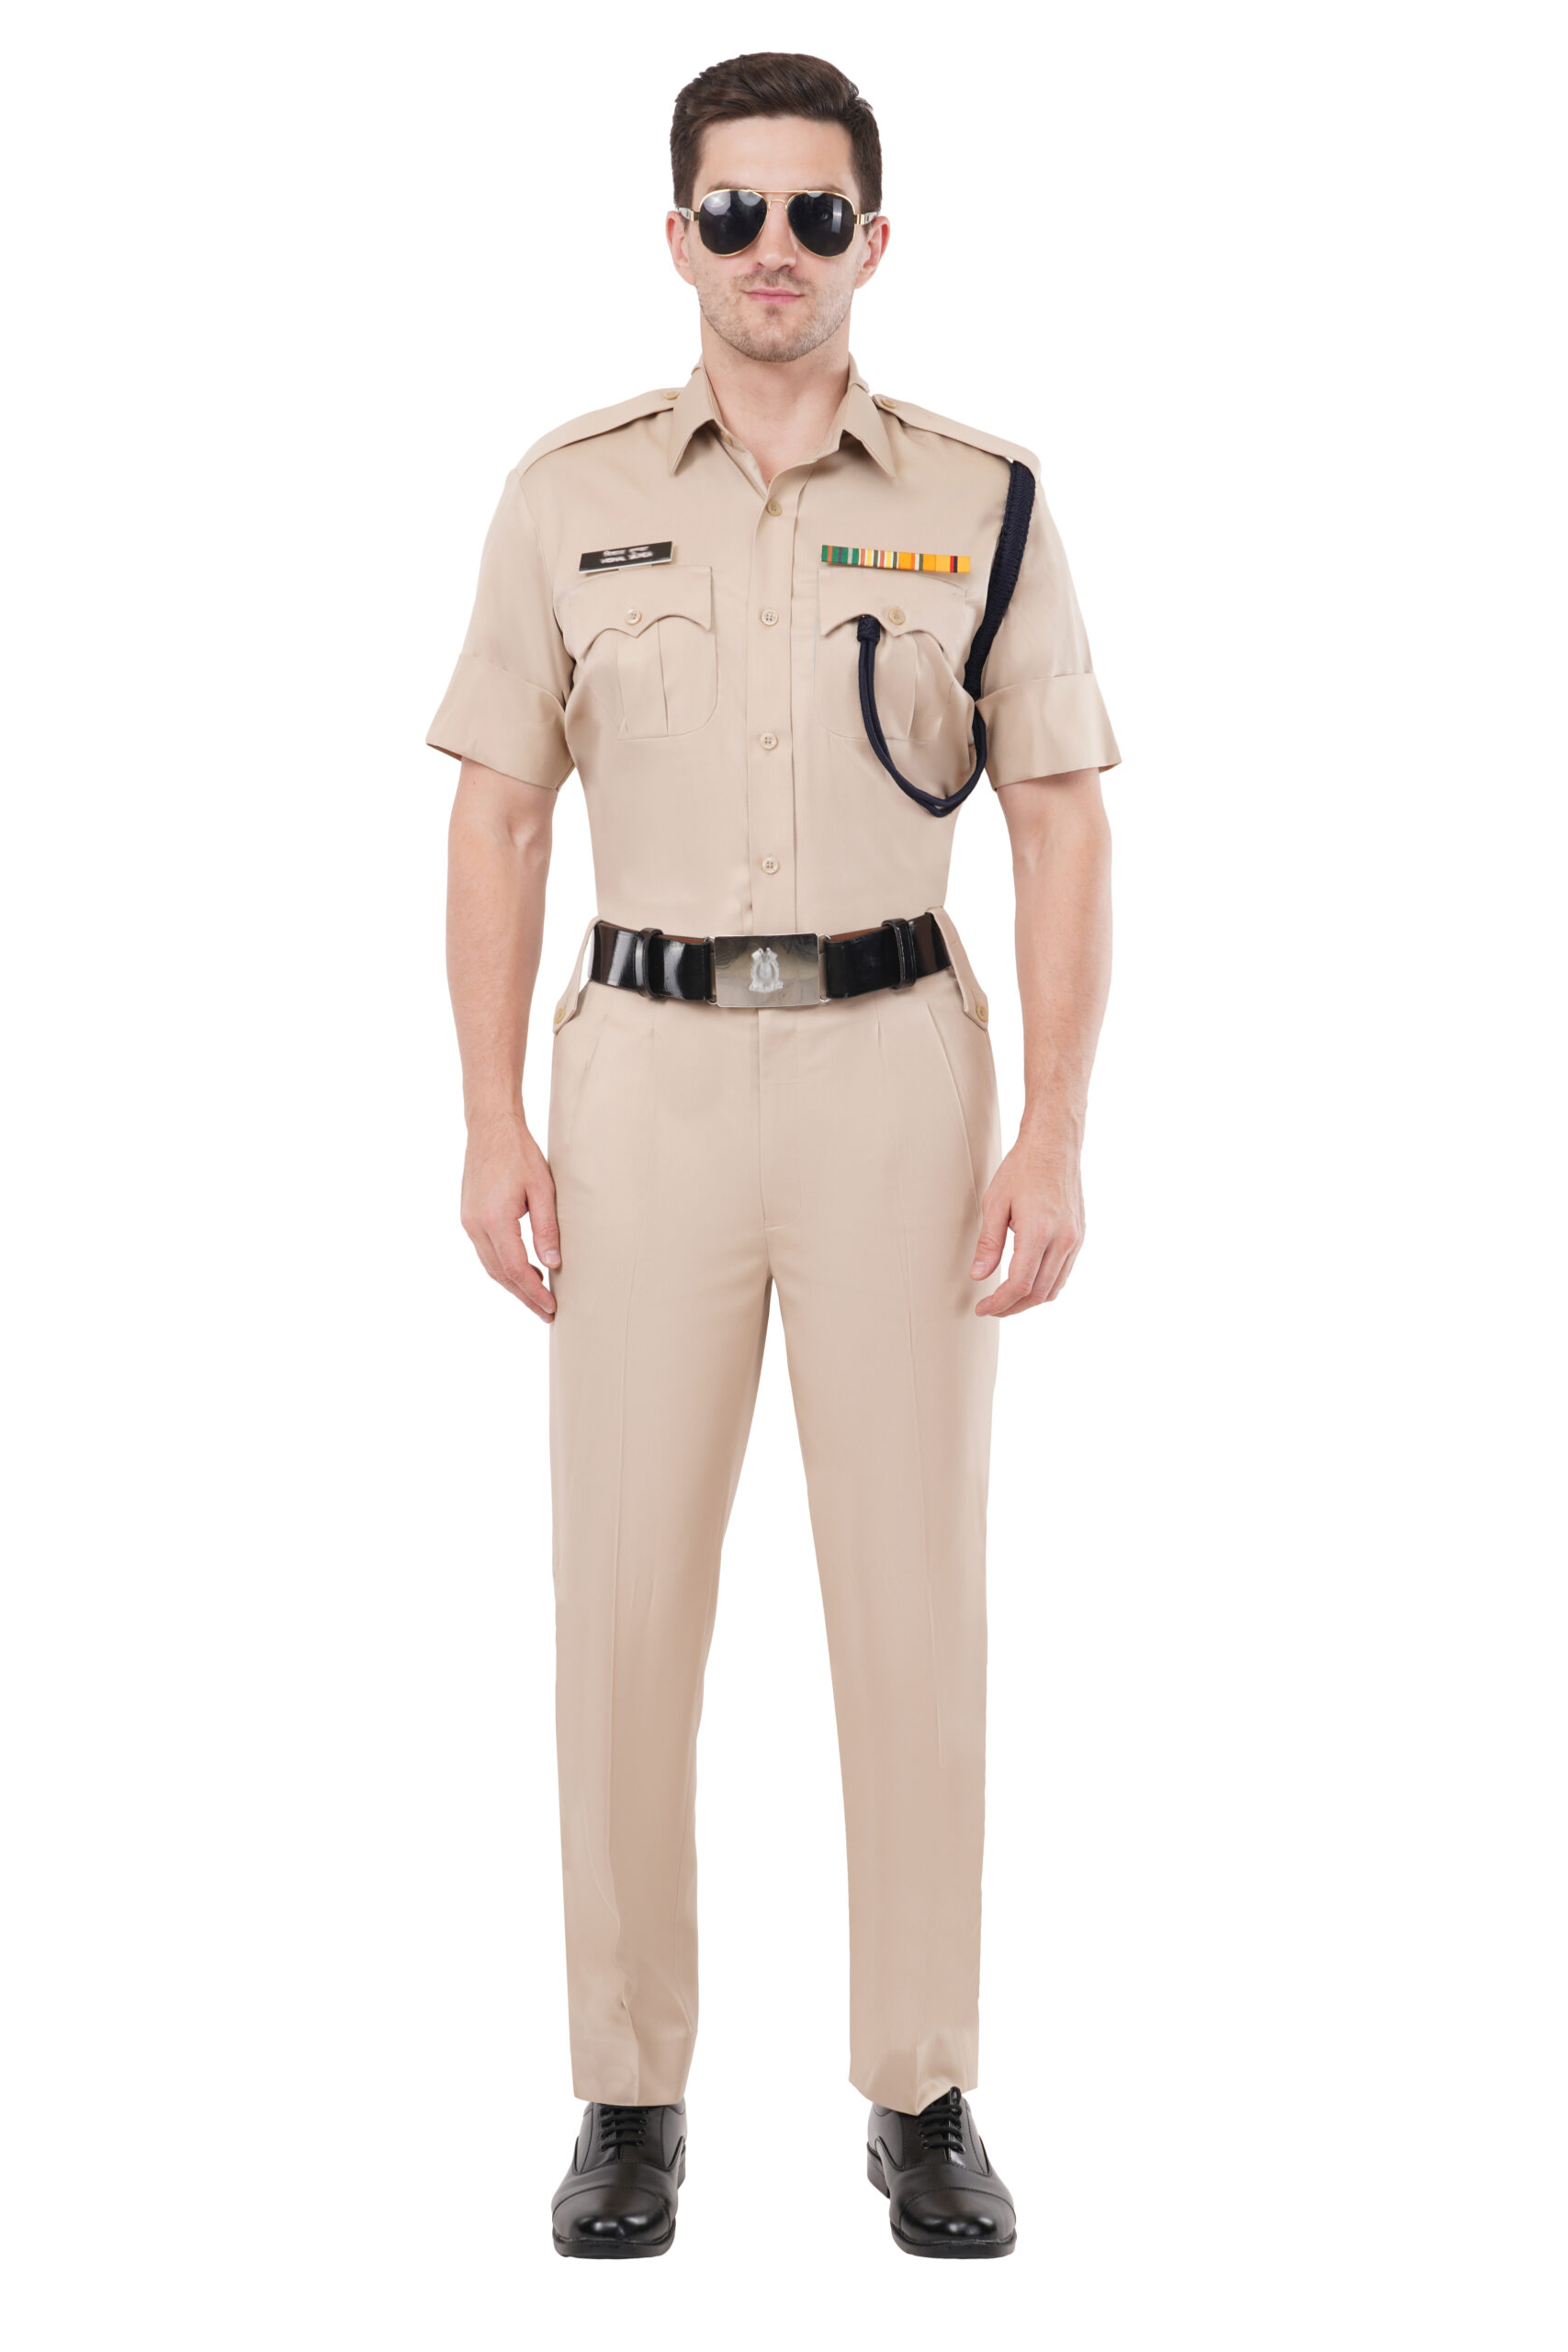 SSB Stretchable Khaki Uniform